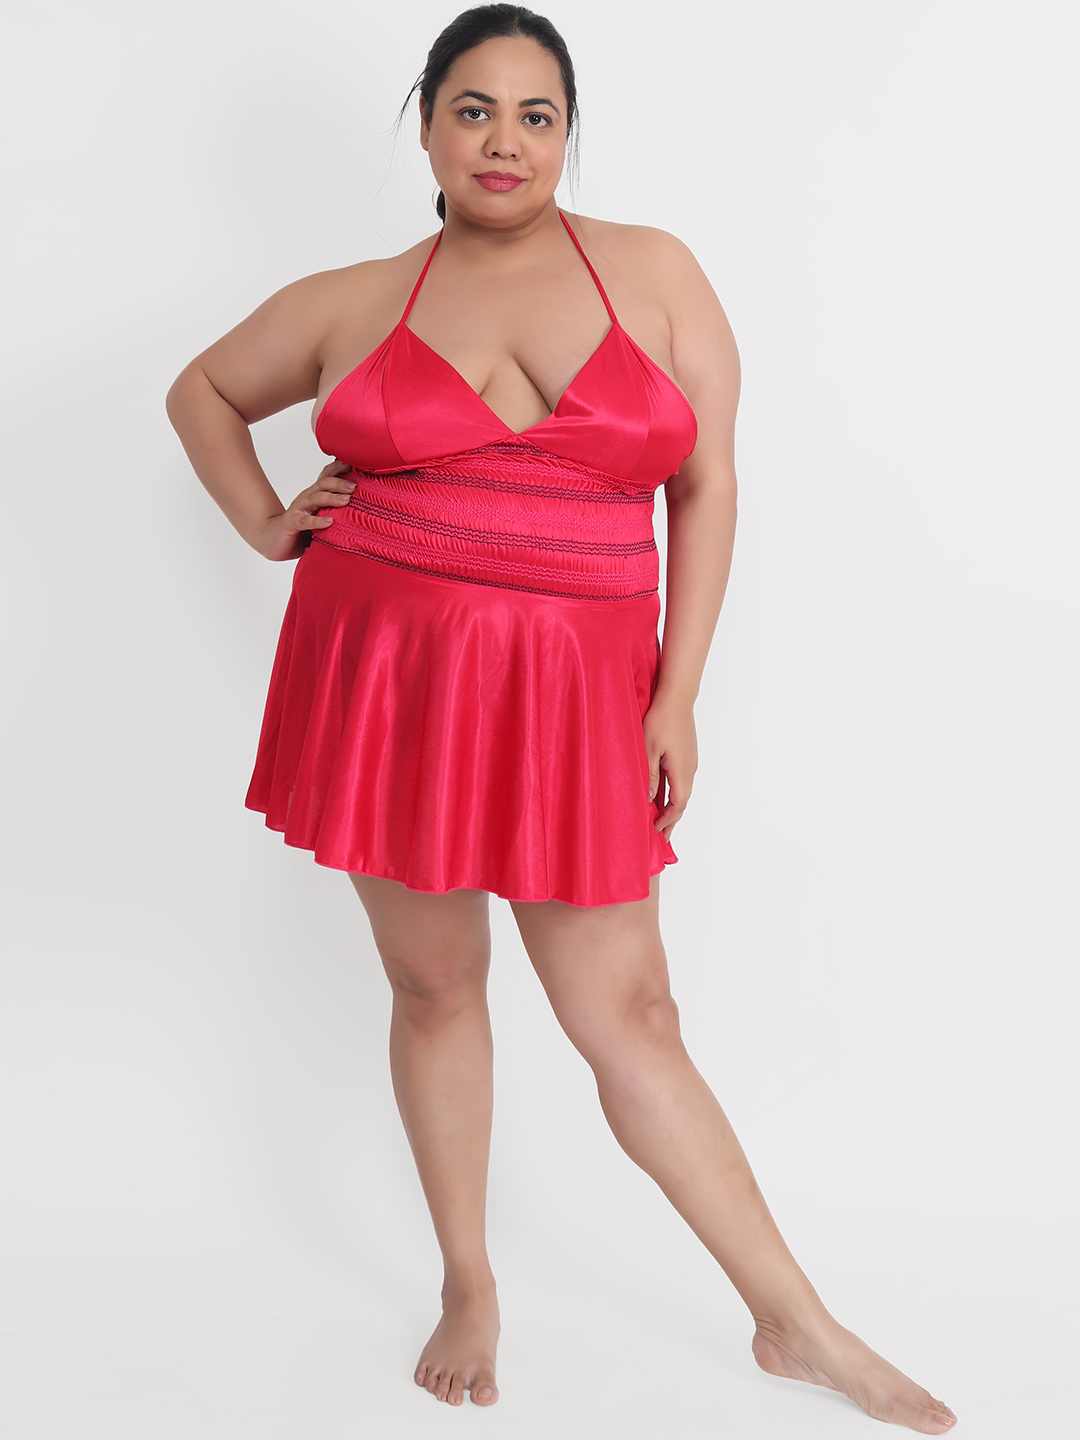 Plus Size Hot Short Red Bikini Dress for Honeymoon BB35C – Klamotten